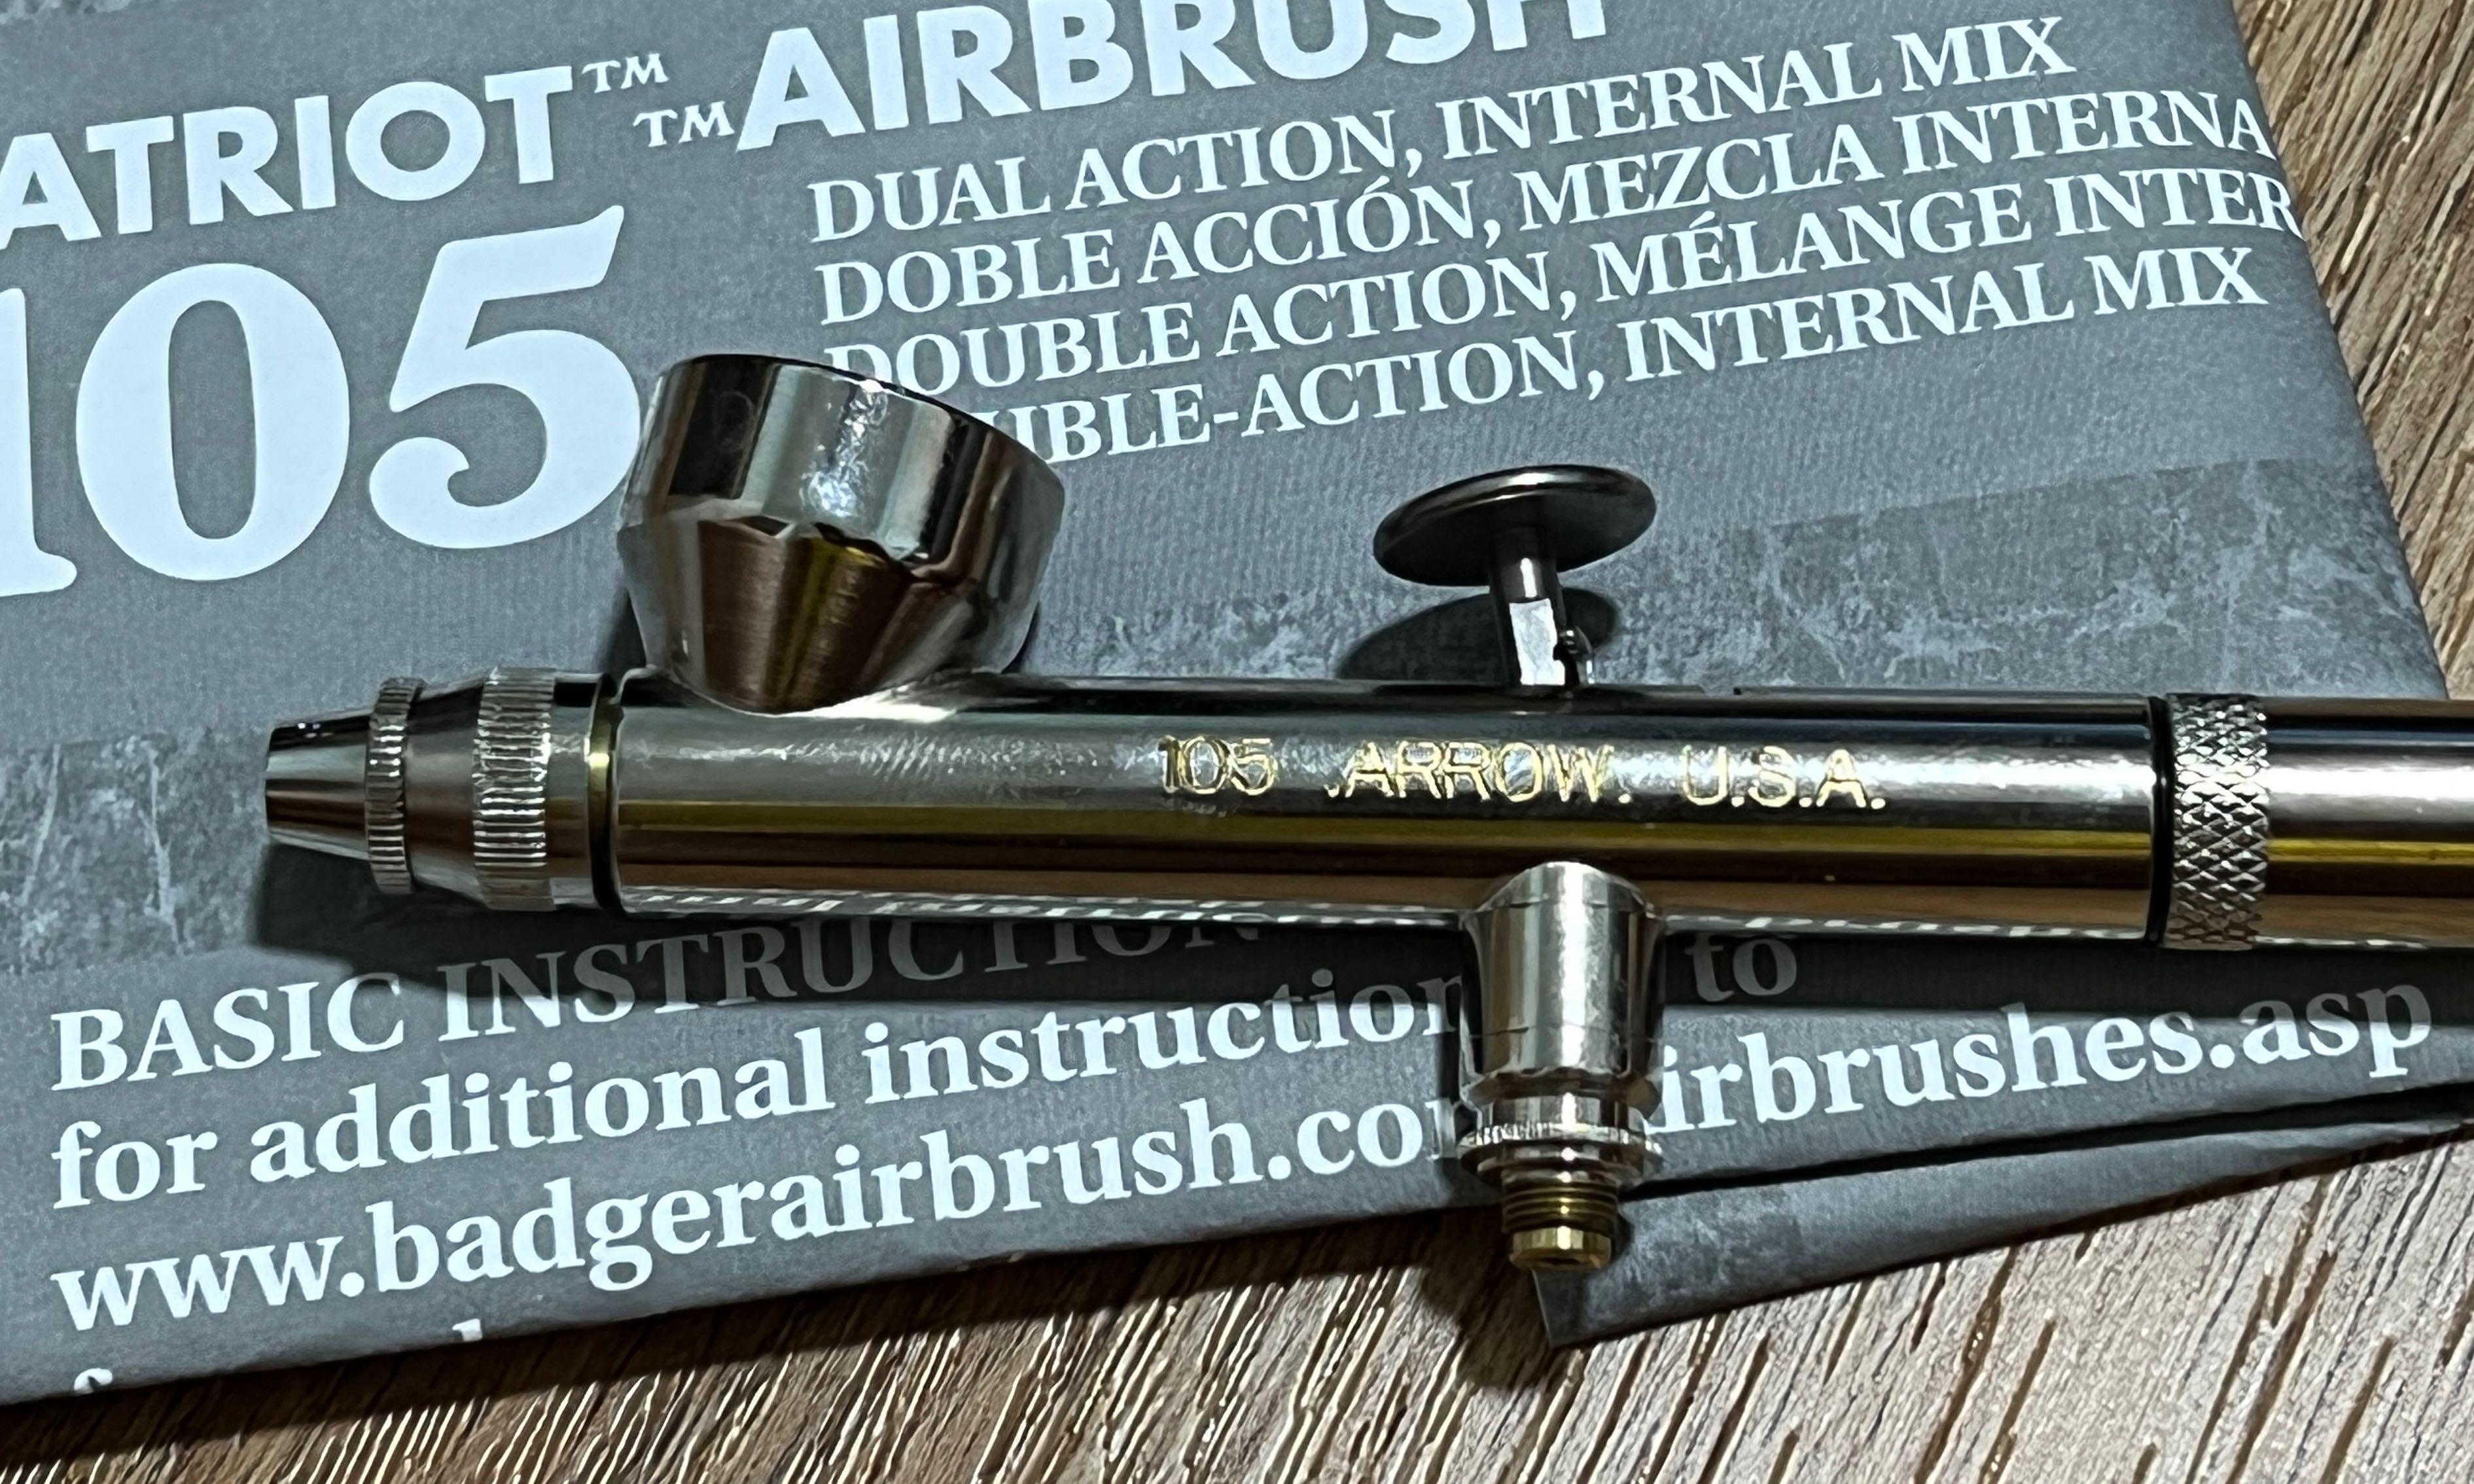 Badger Air-Brush Co. Patriot Arrow Airbrush